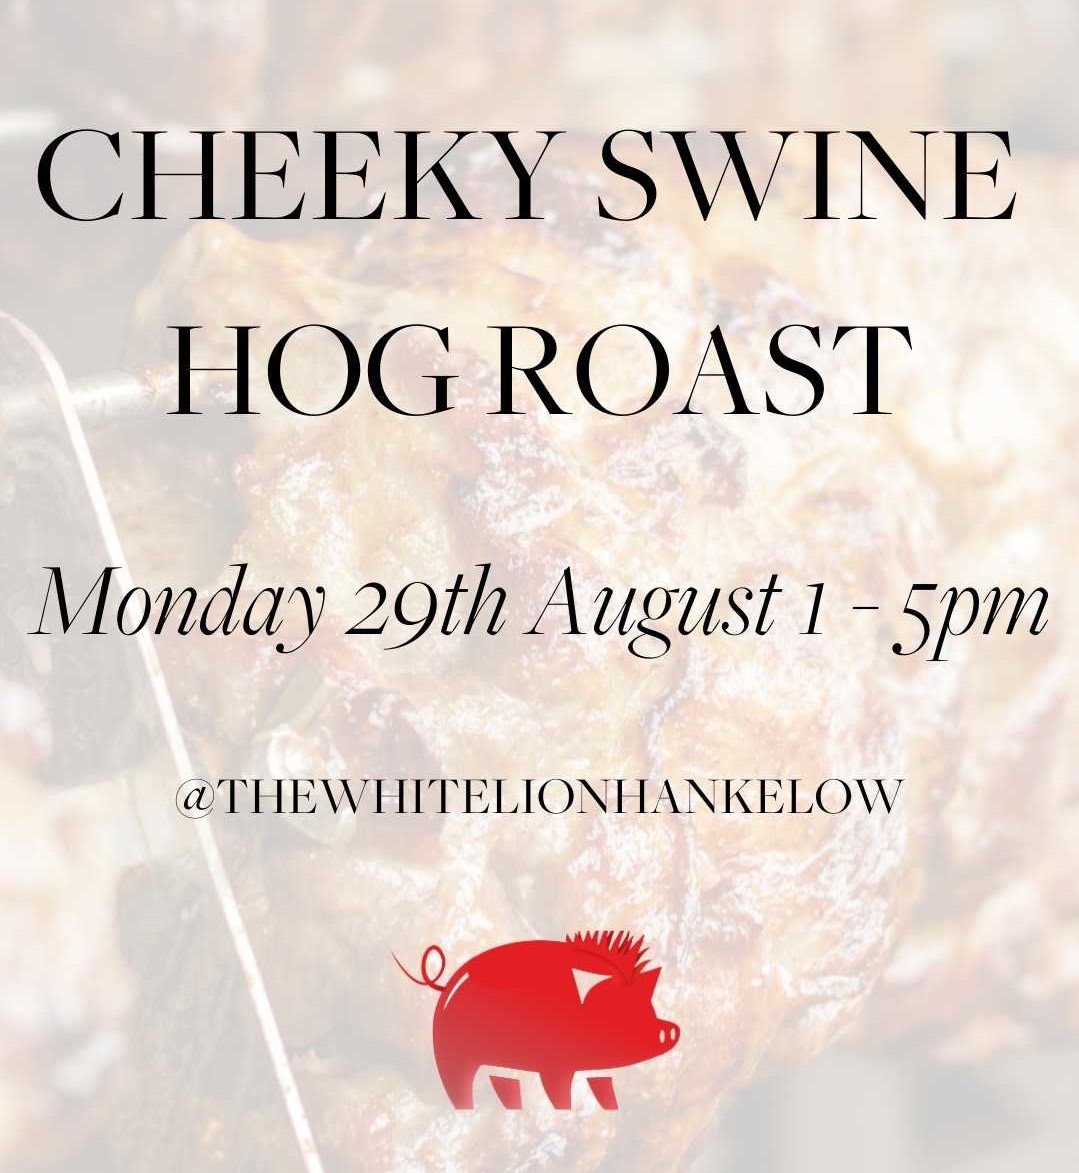 Cheeky Swine Hog Roast